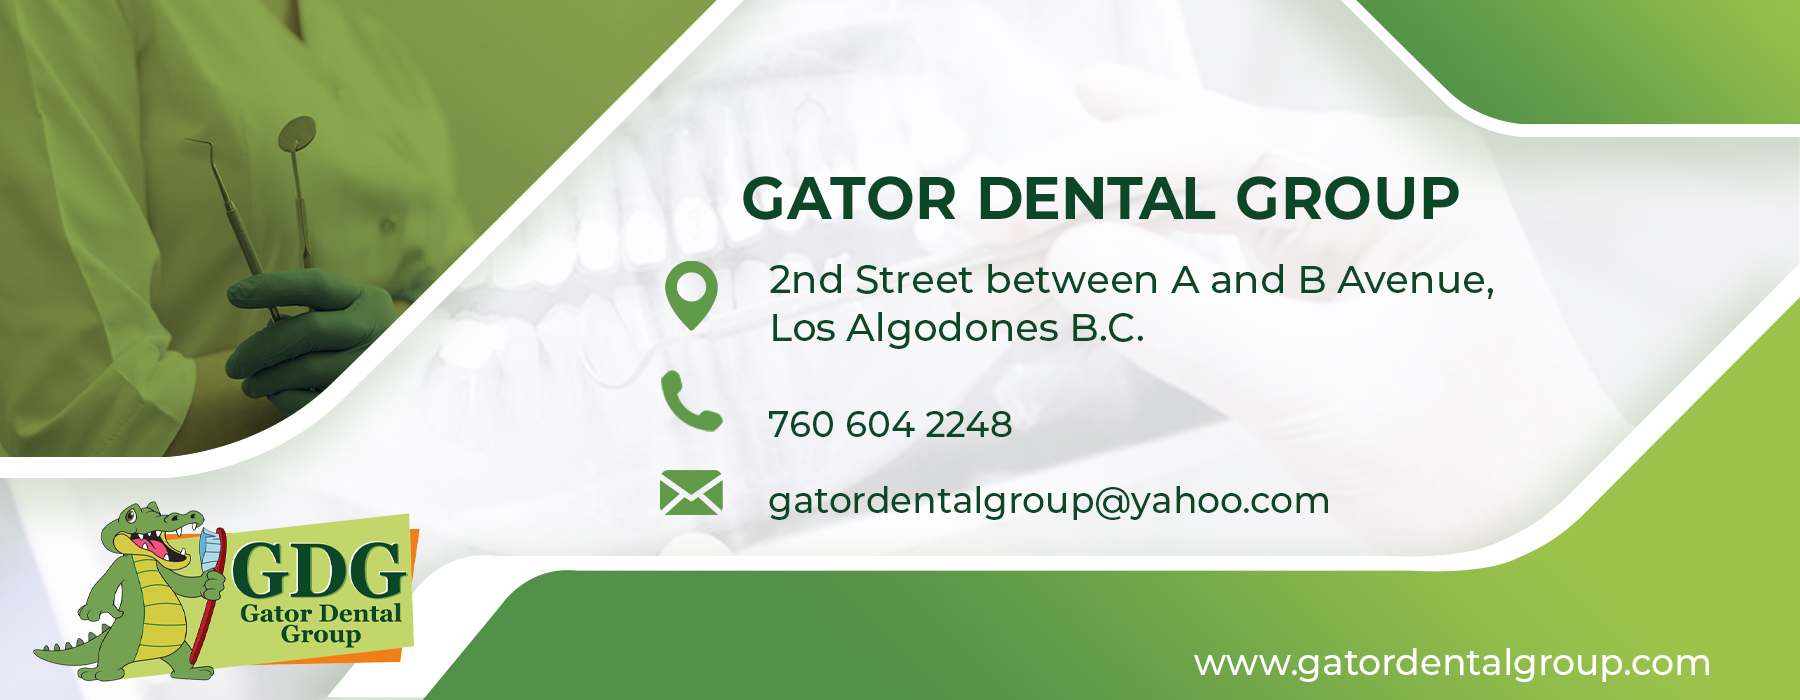  Gator Dental Group